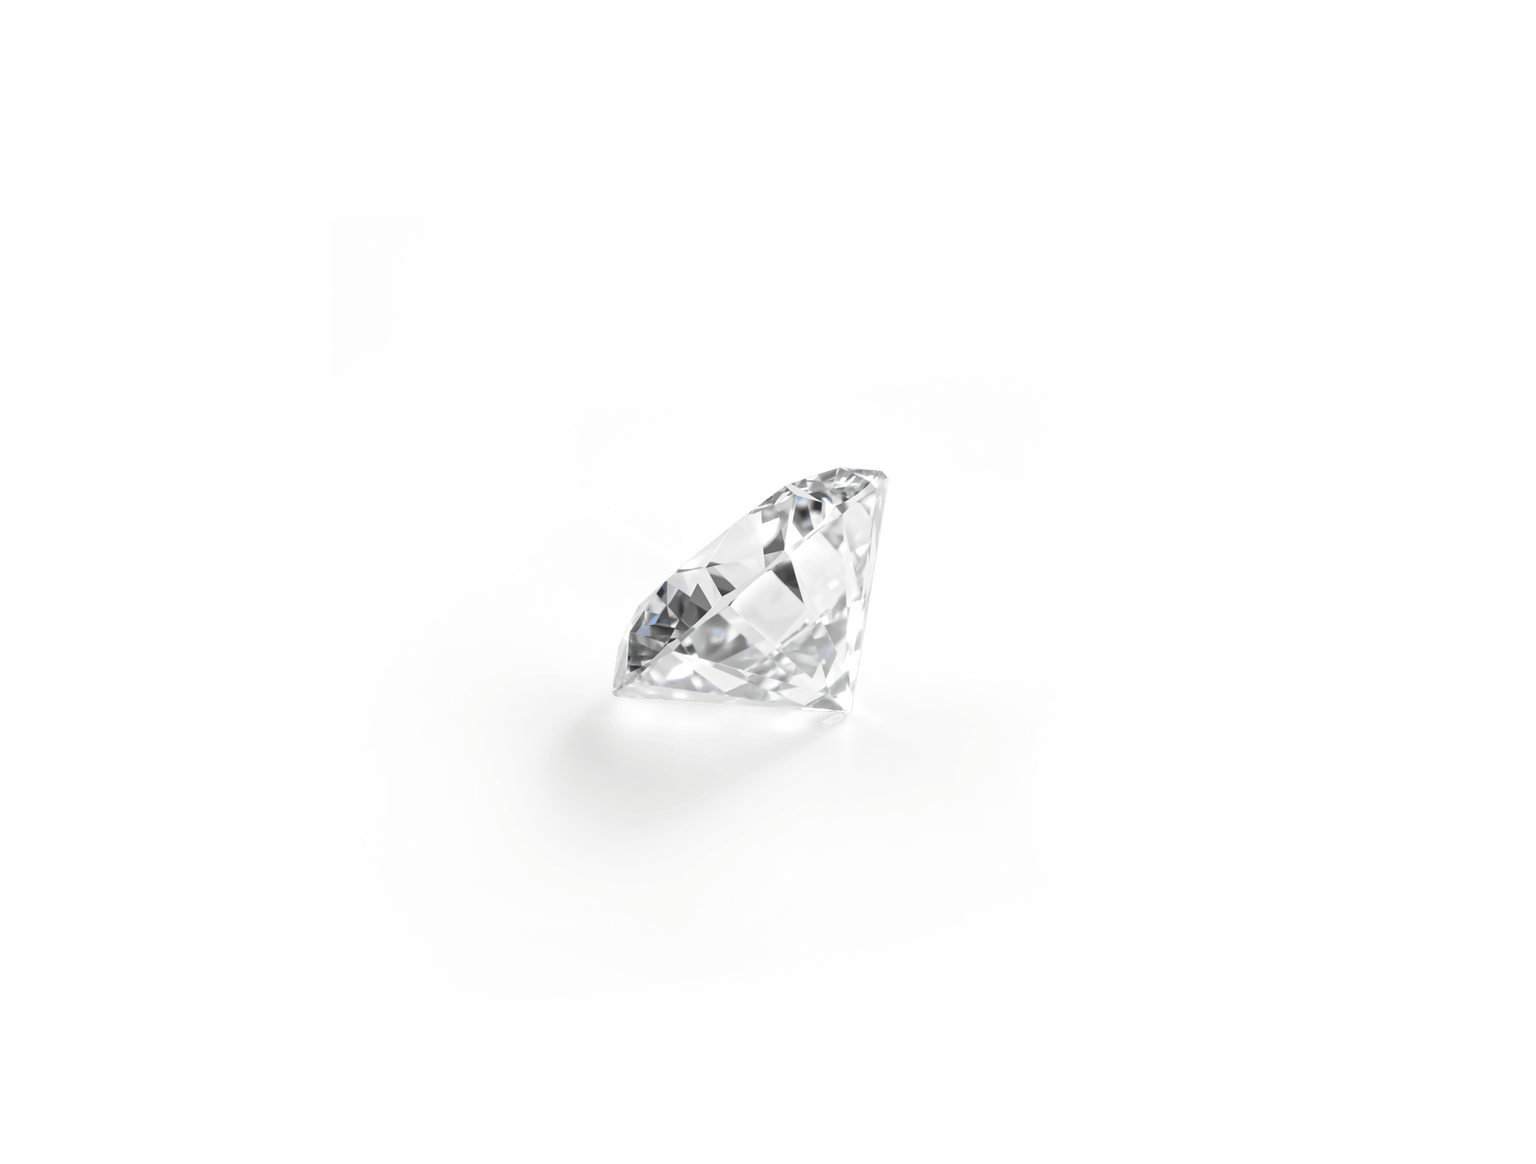 Lab-Grown Loose 1½ct. Round Brilliant Diamond | White